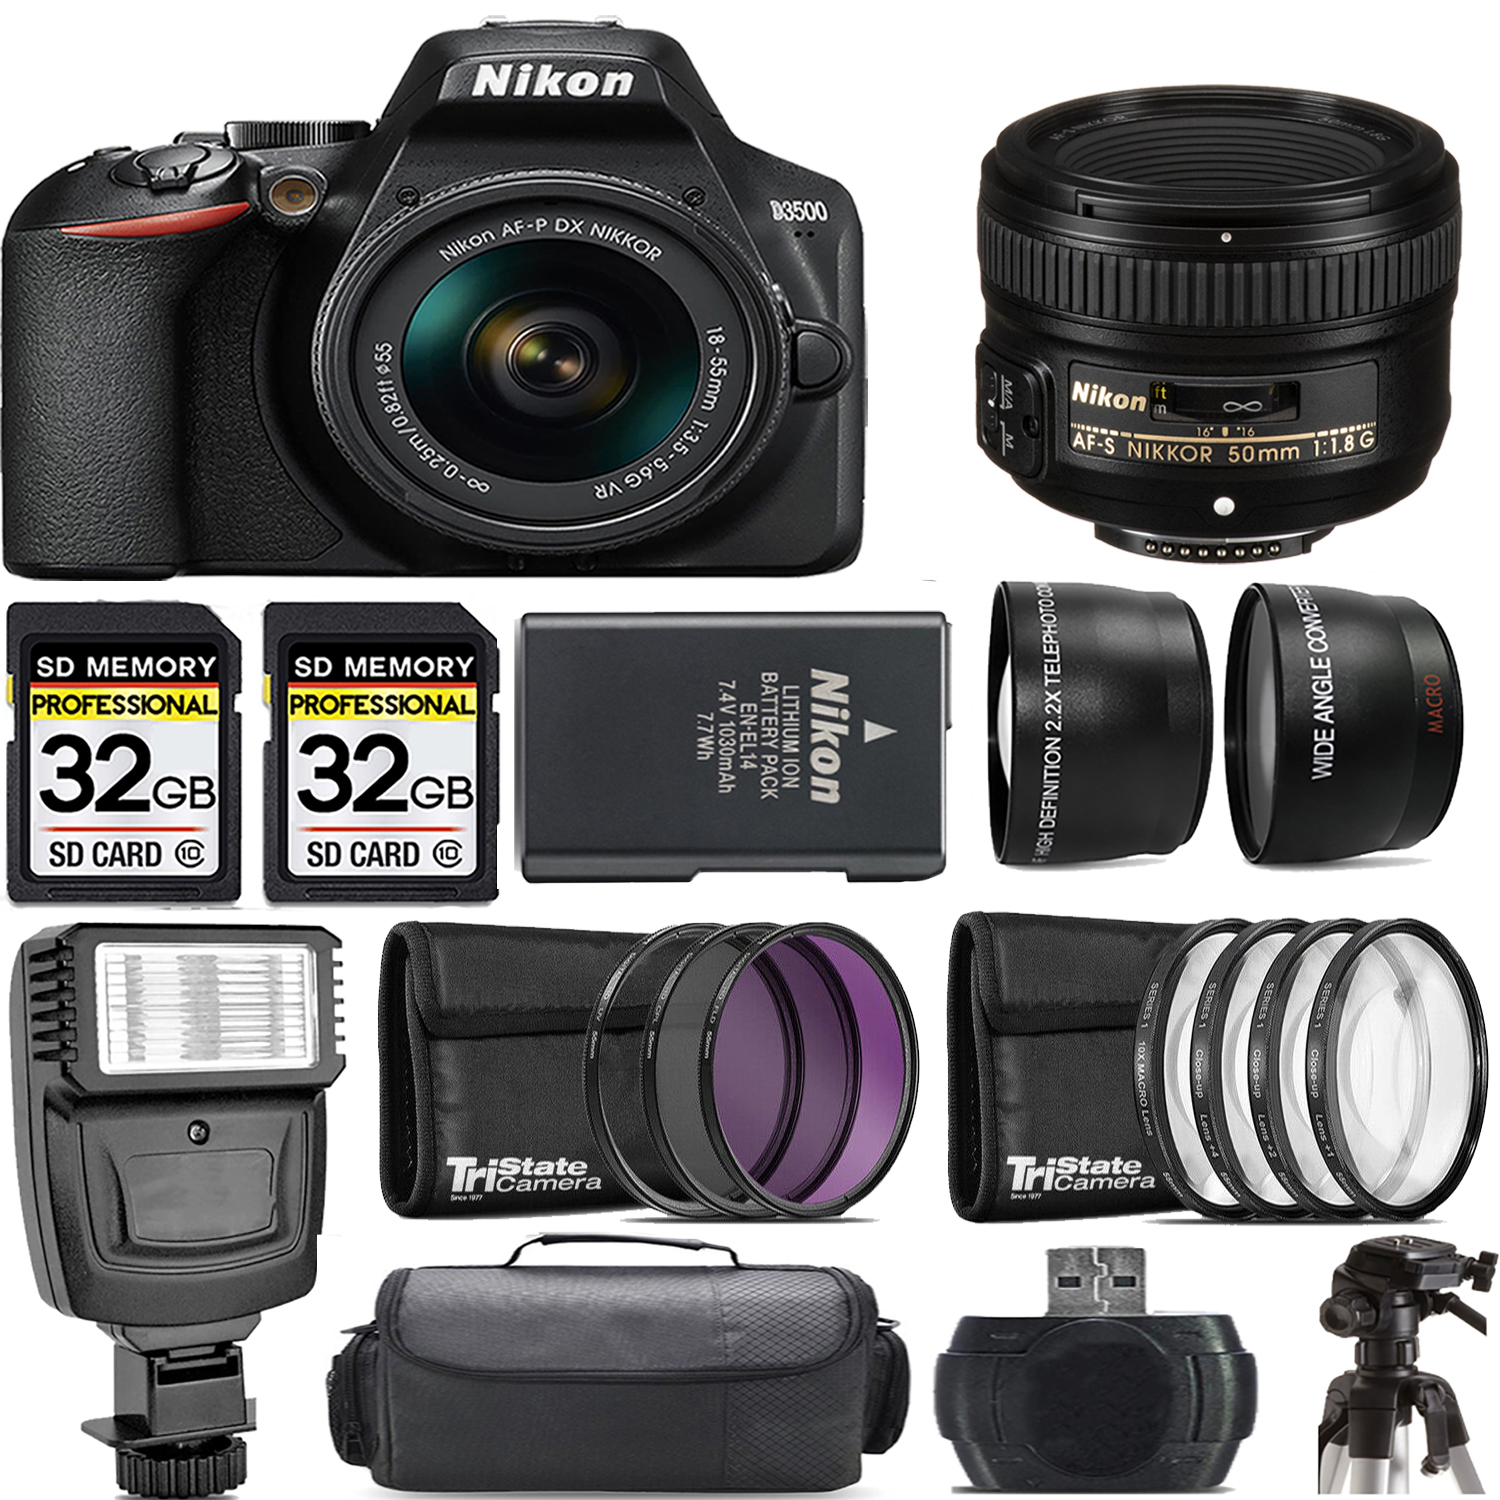 D3500 DSLR Camera with 18-55mm Lens + 50mm f/1.8 Lens + Flash - Kit *FREE SHIPPING*